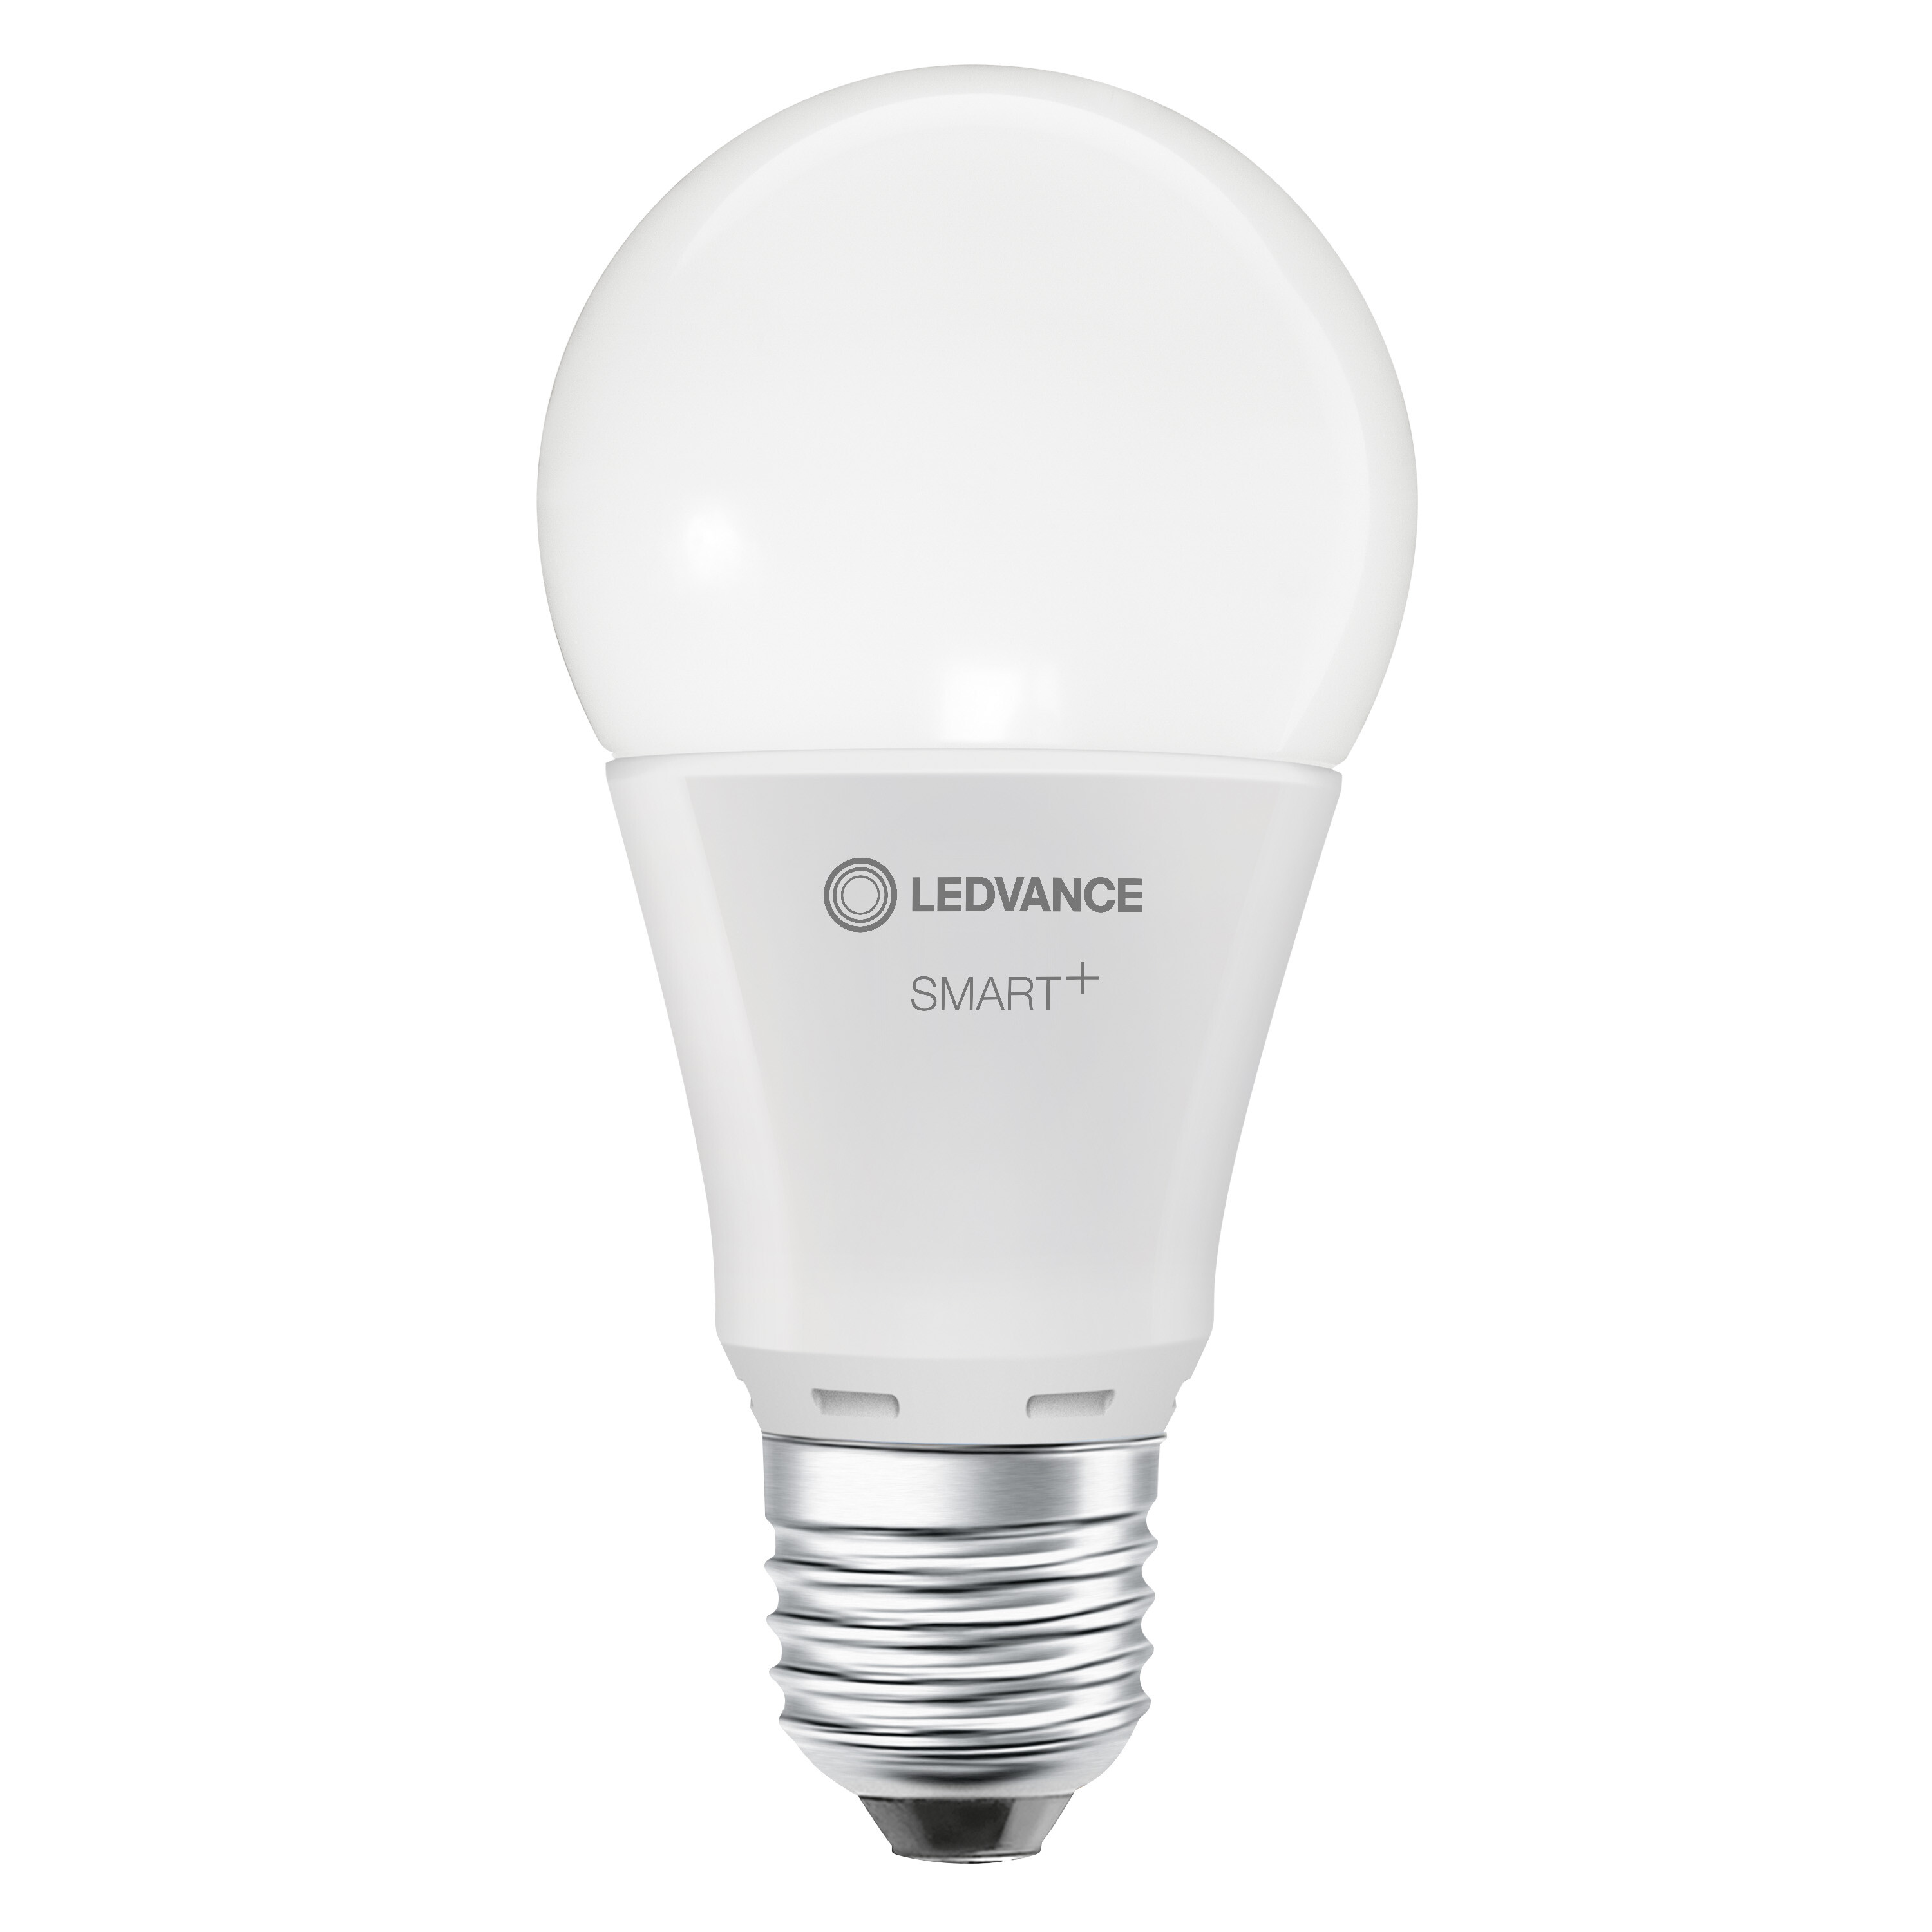 LEDVANCE SMART+ Lampe White Tunable änderbar Classic Lichtfarbe WiFi LED